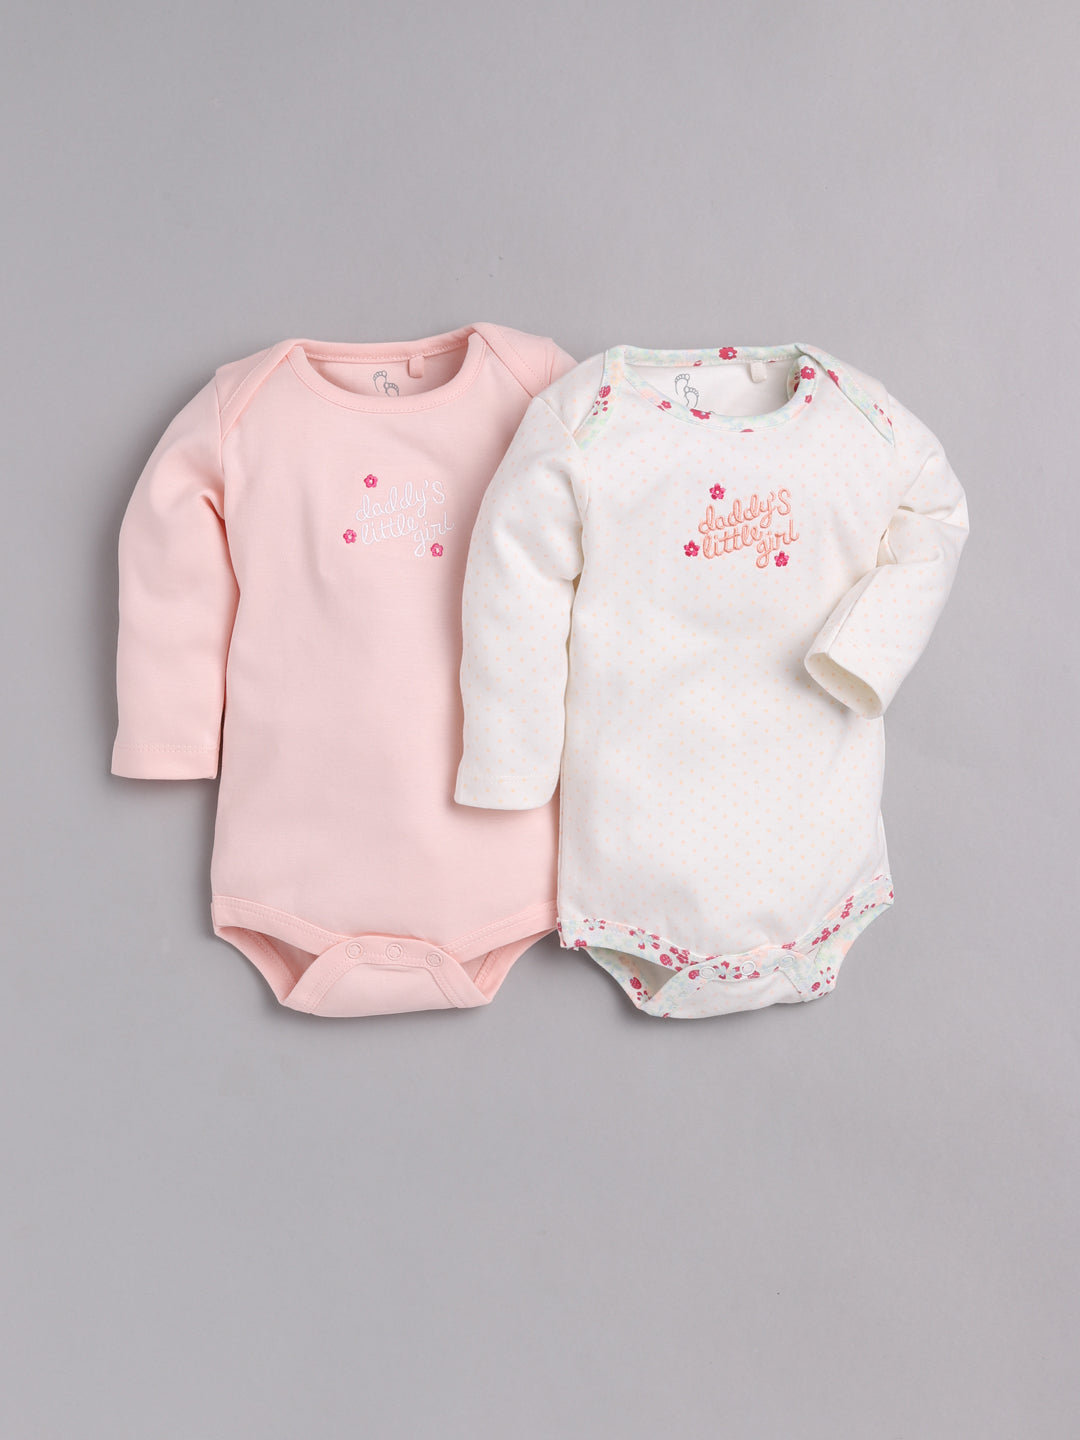 Girls Baby Romper for All Season/Sleep Suit/Comfort fit/ 100% Cotton (Set of 2)-FUSHIA